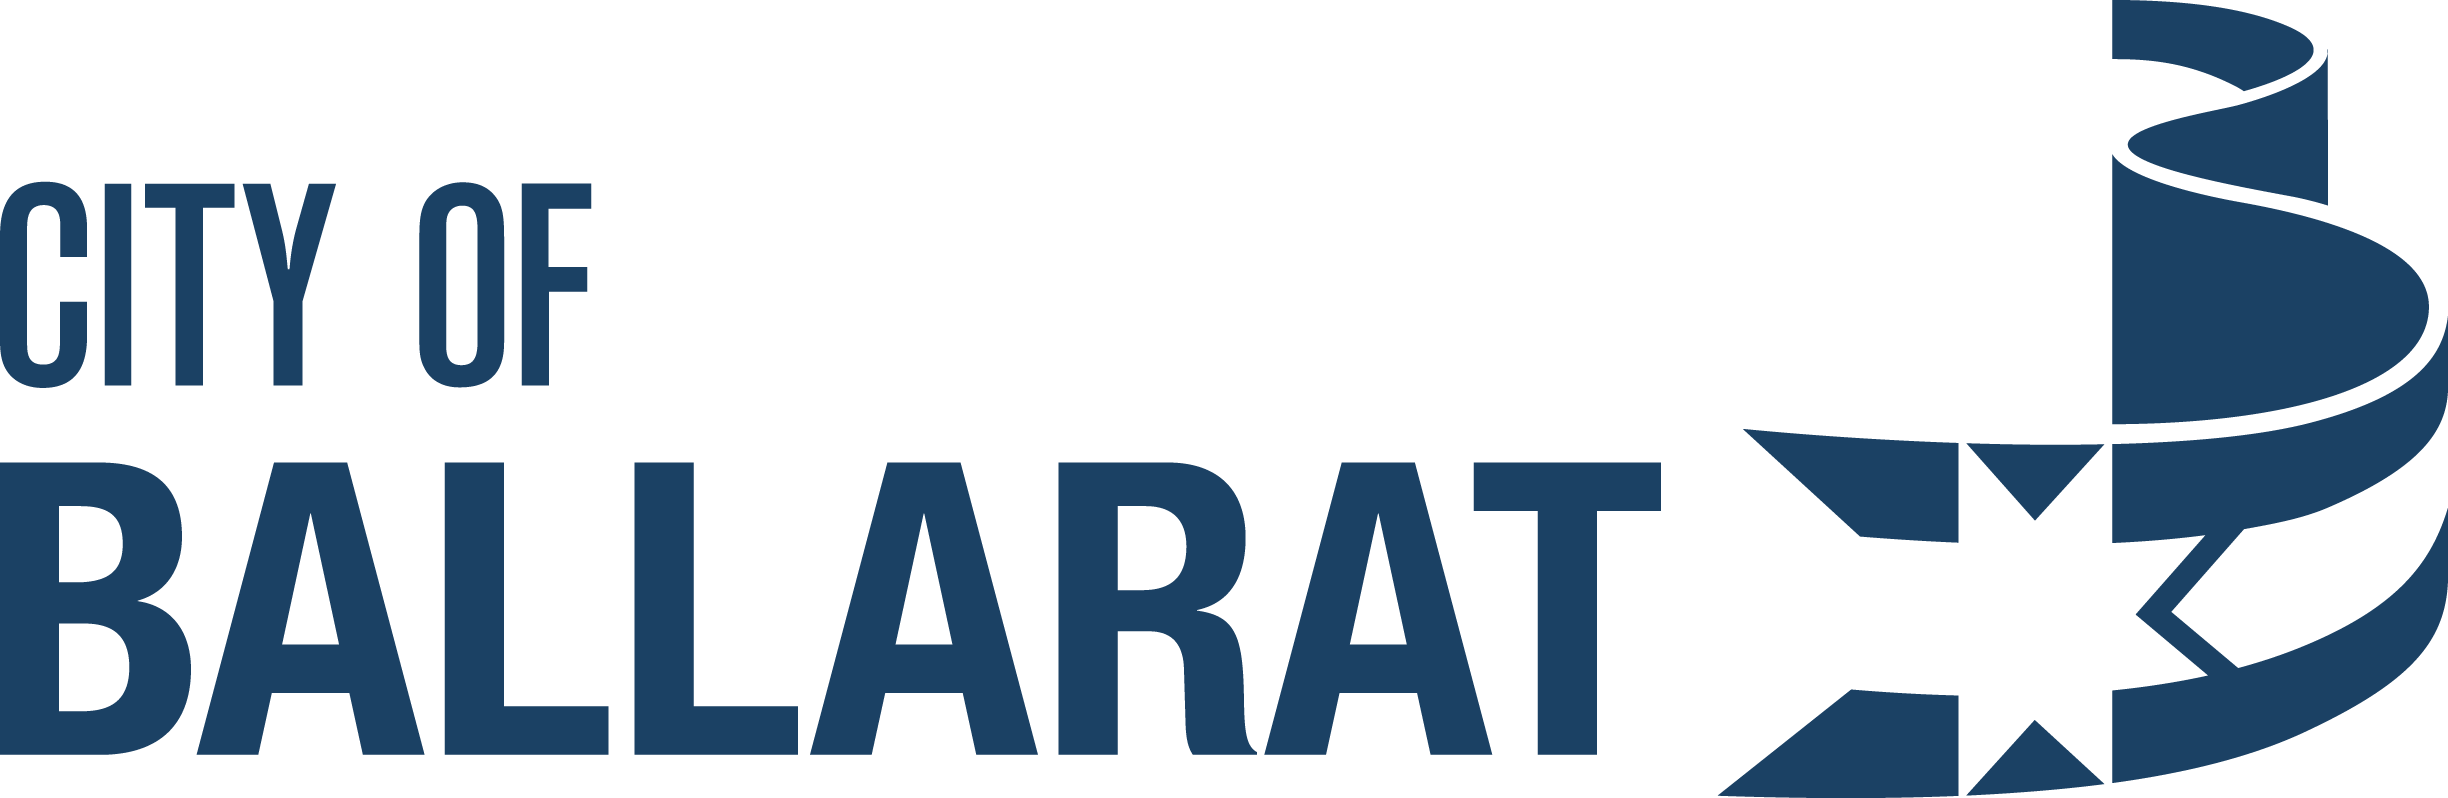 City of Ballarat Logo